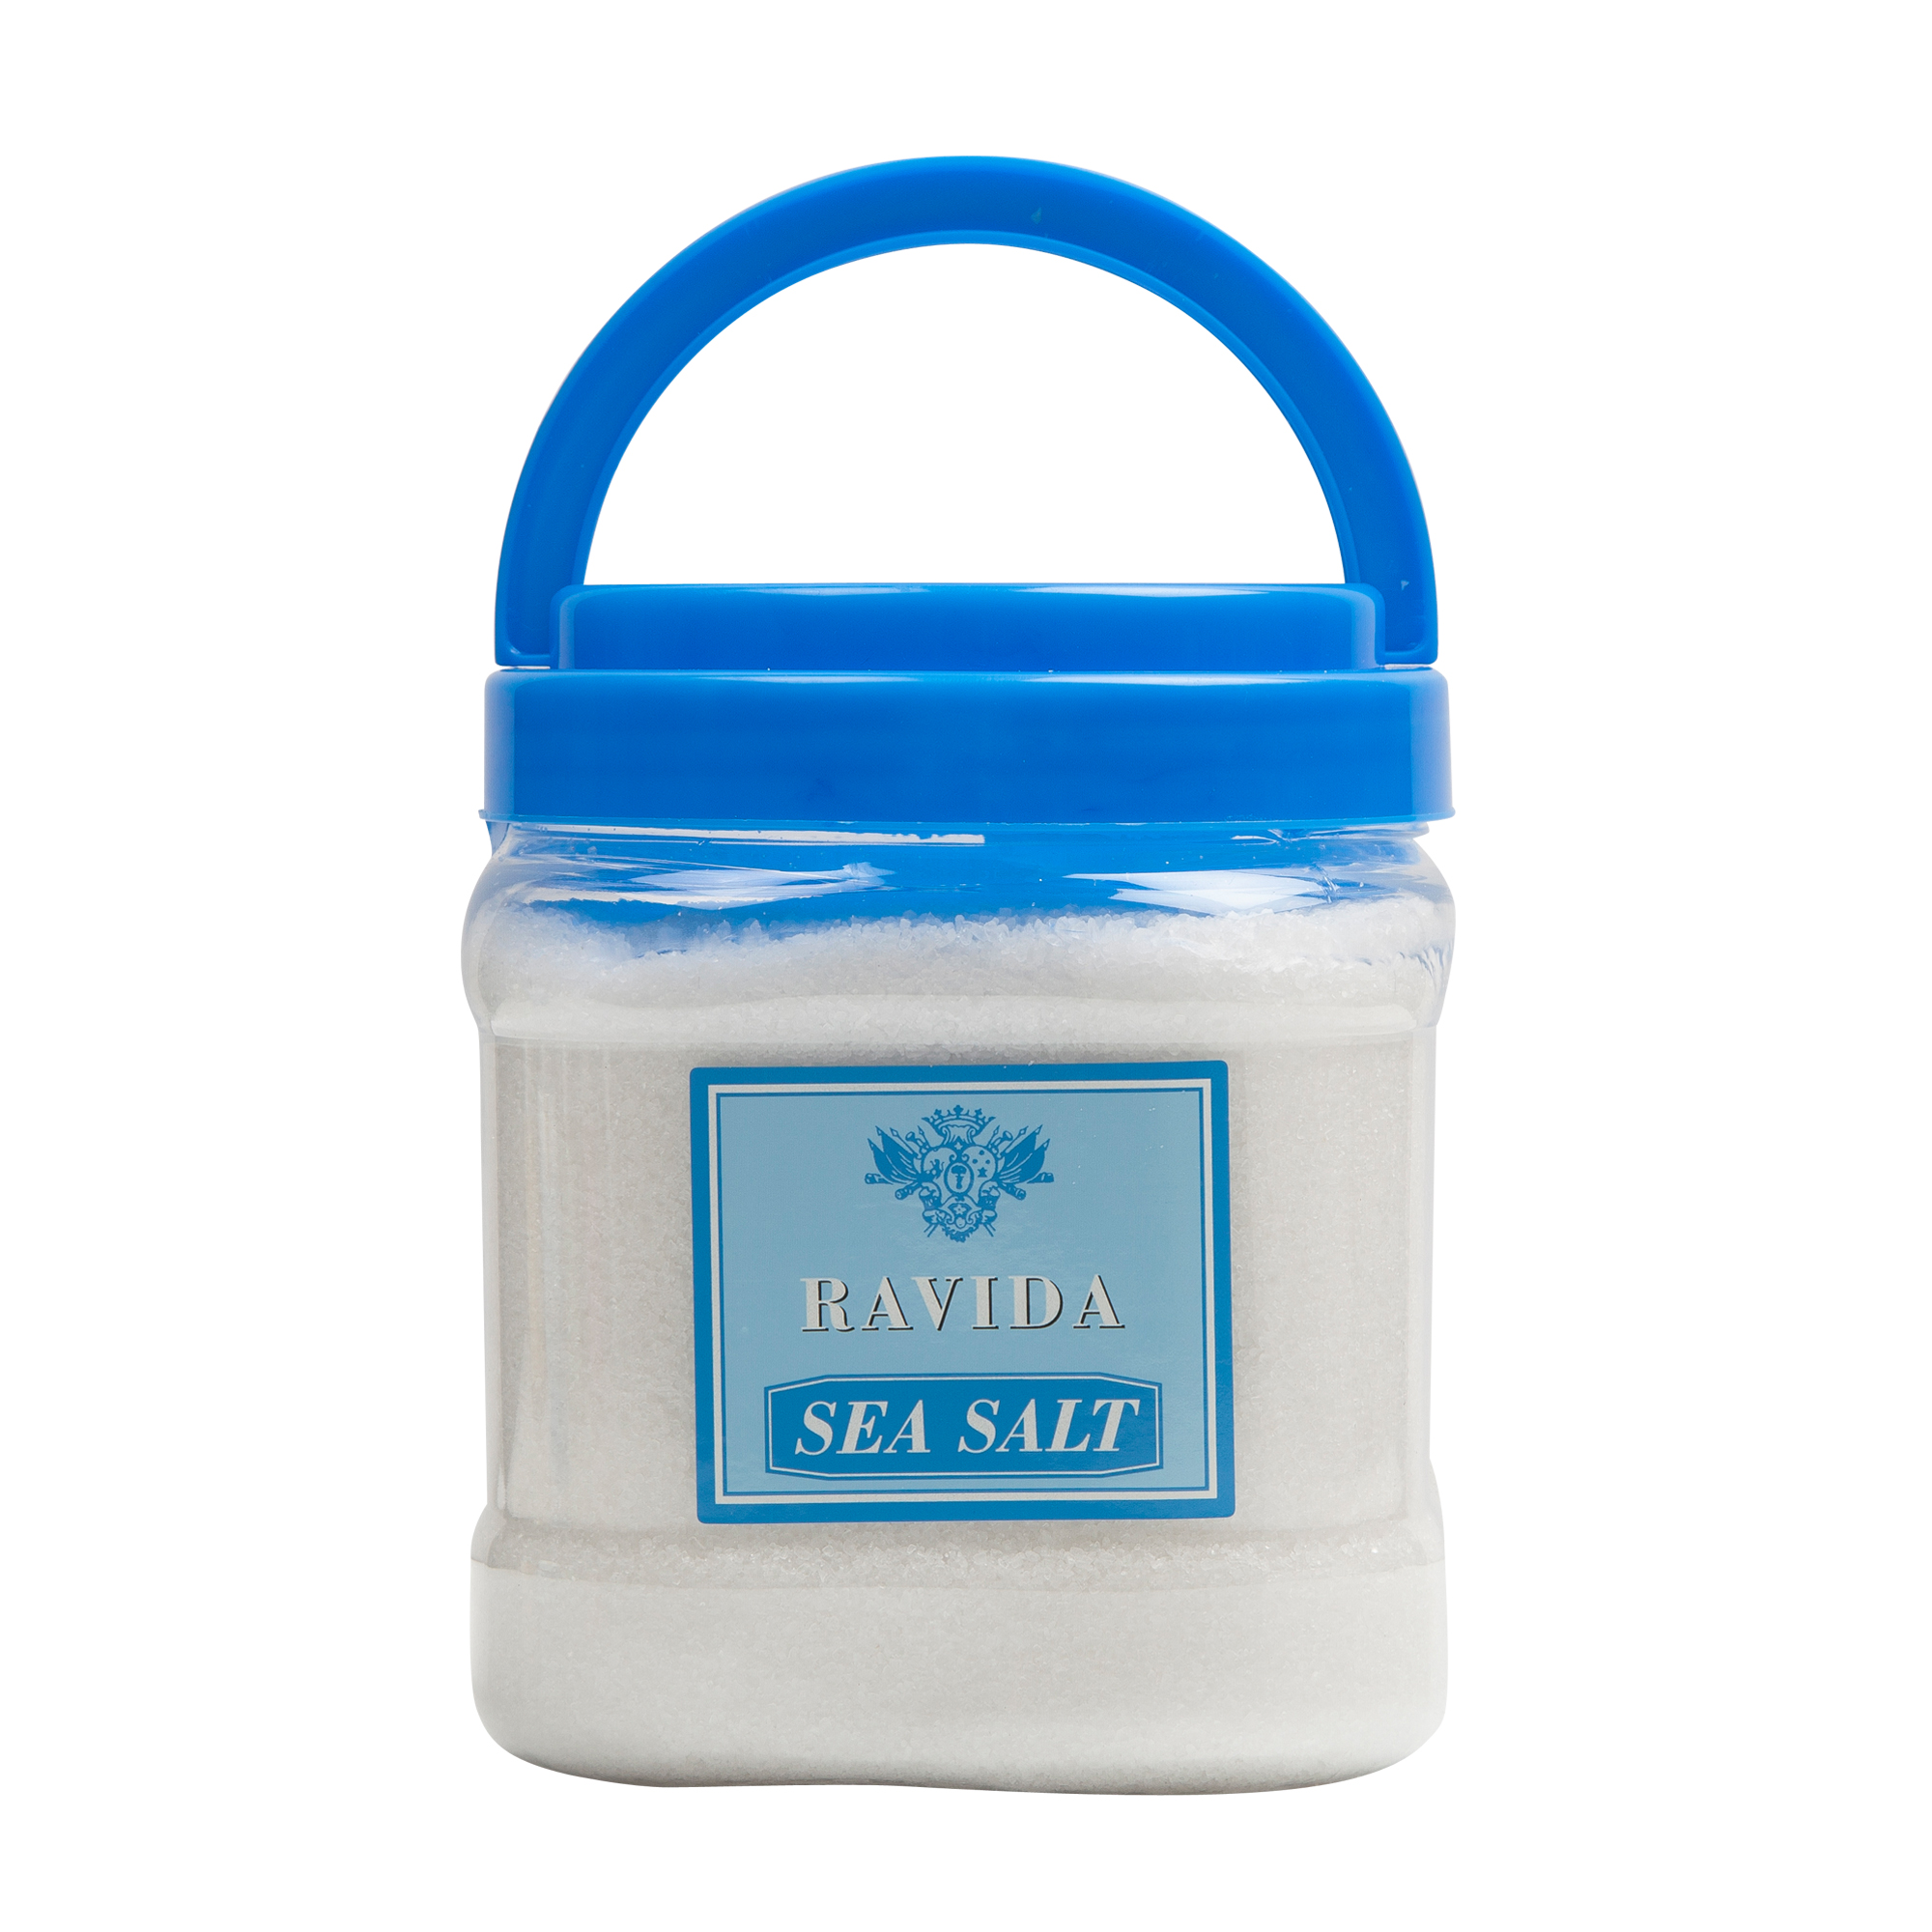 Ravida Sea Salt 1600g Bucket